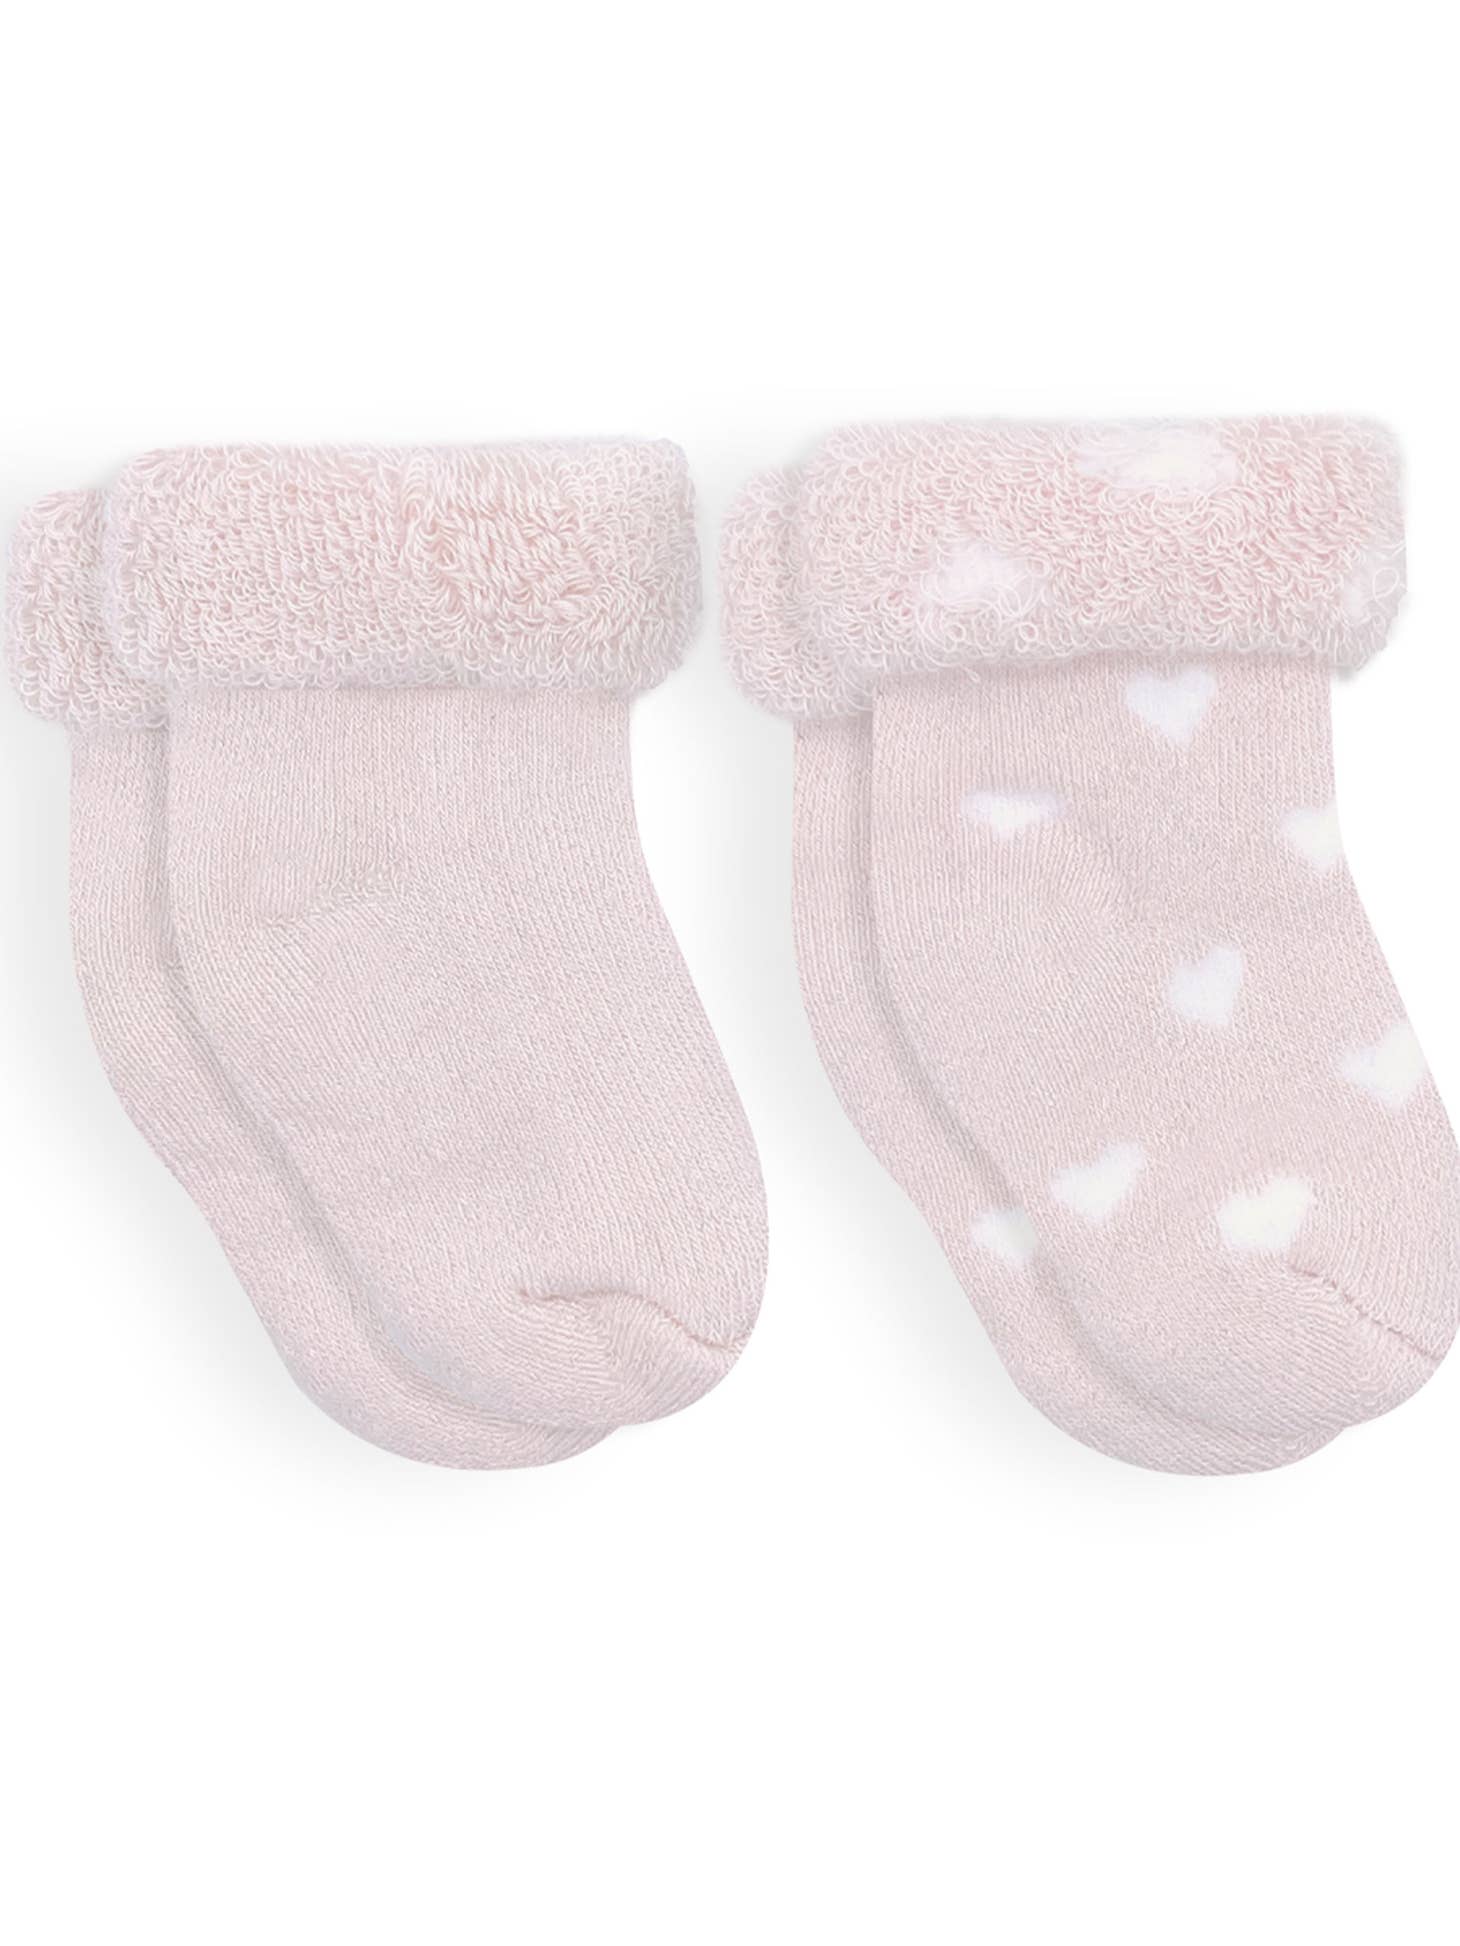 Heart Terry Baby Socks - Two Pair Set - Twinkle Twinkle Little One